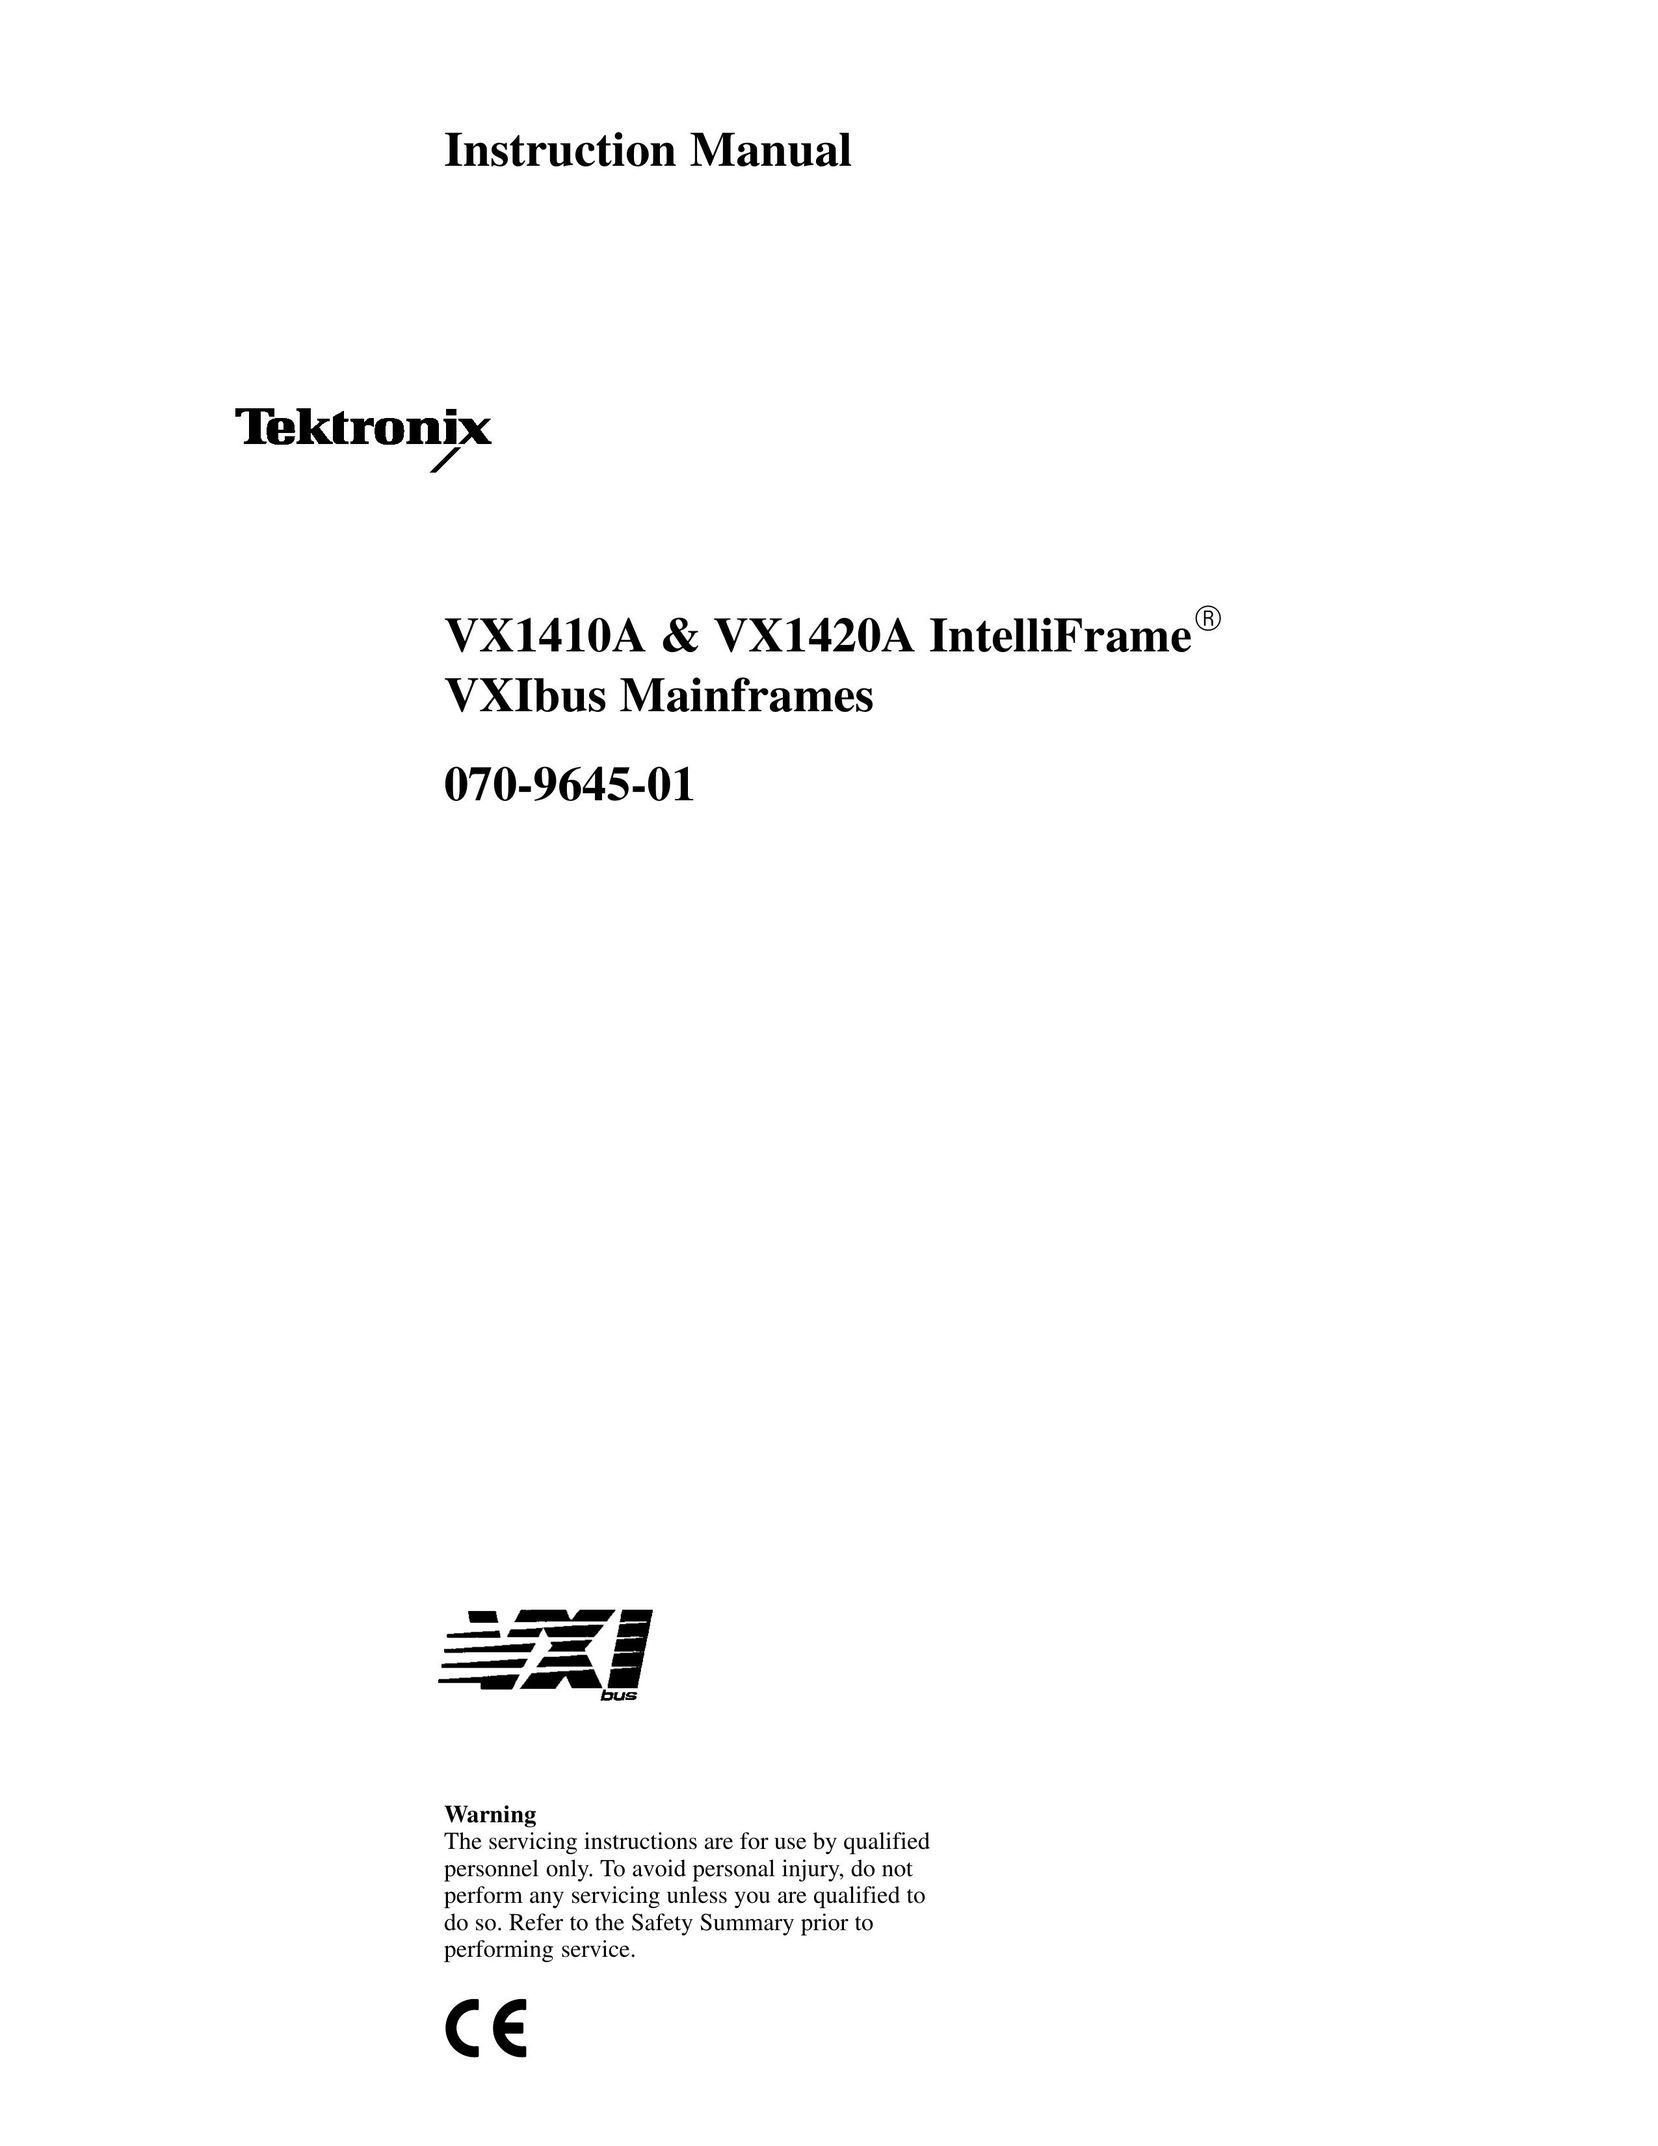 VXI VX1420A Computer Hardware User Manual